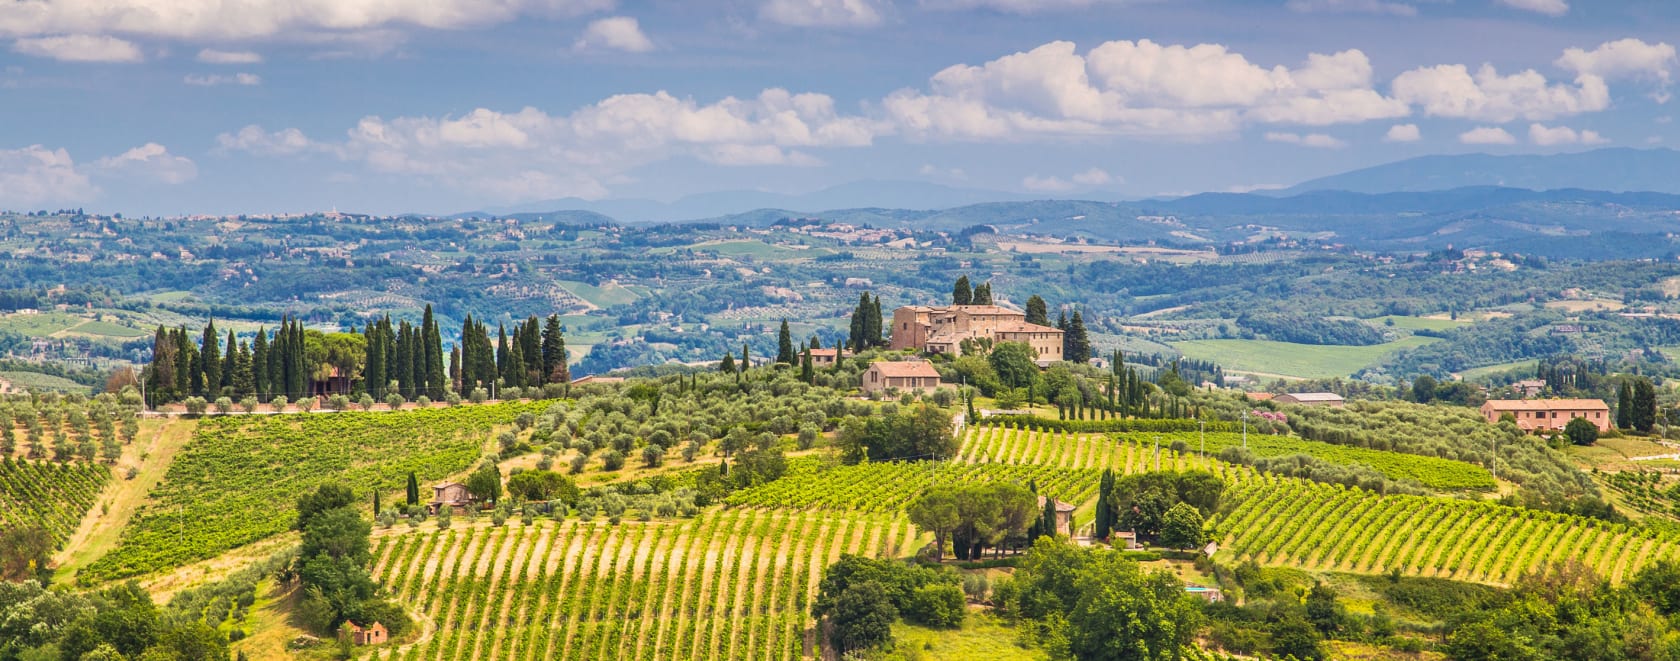 Wine region near Florence, Italy.